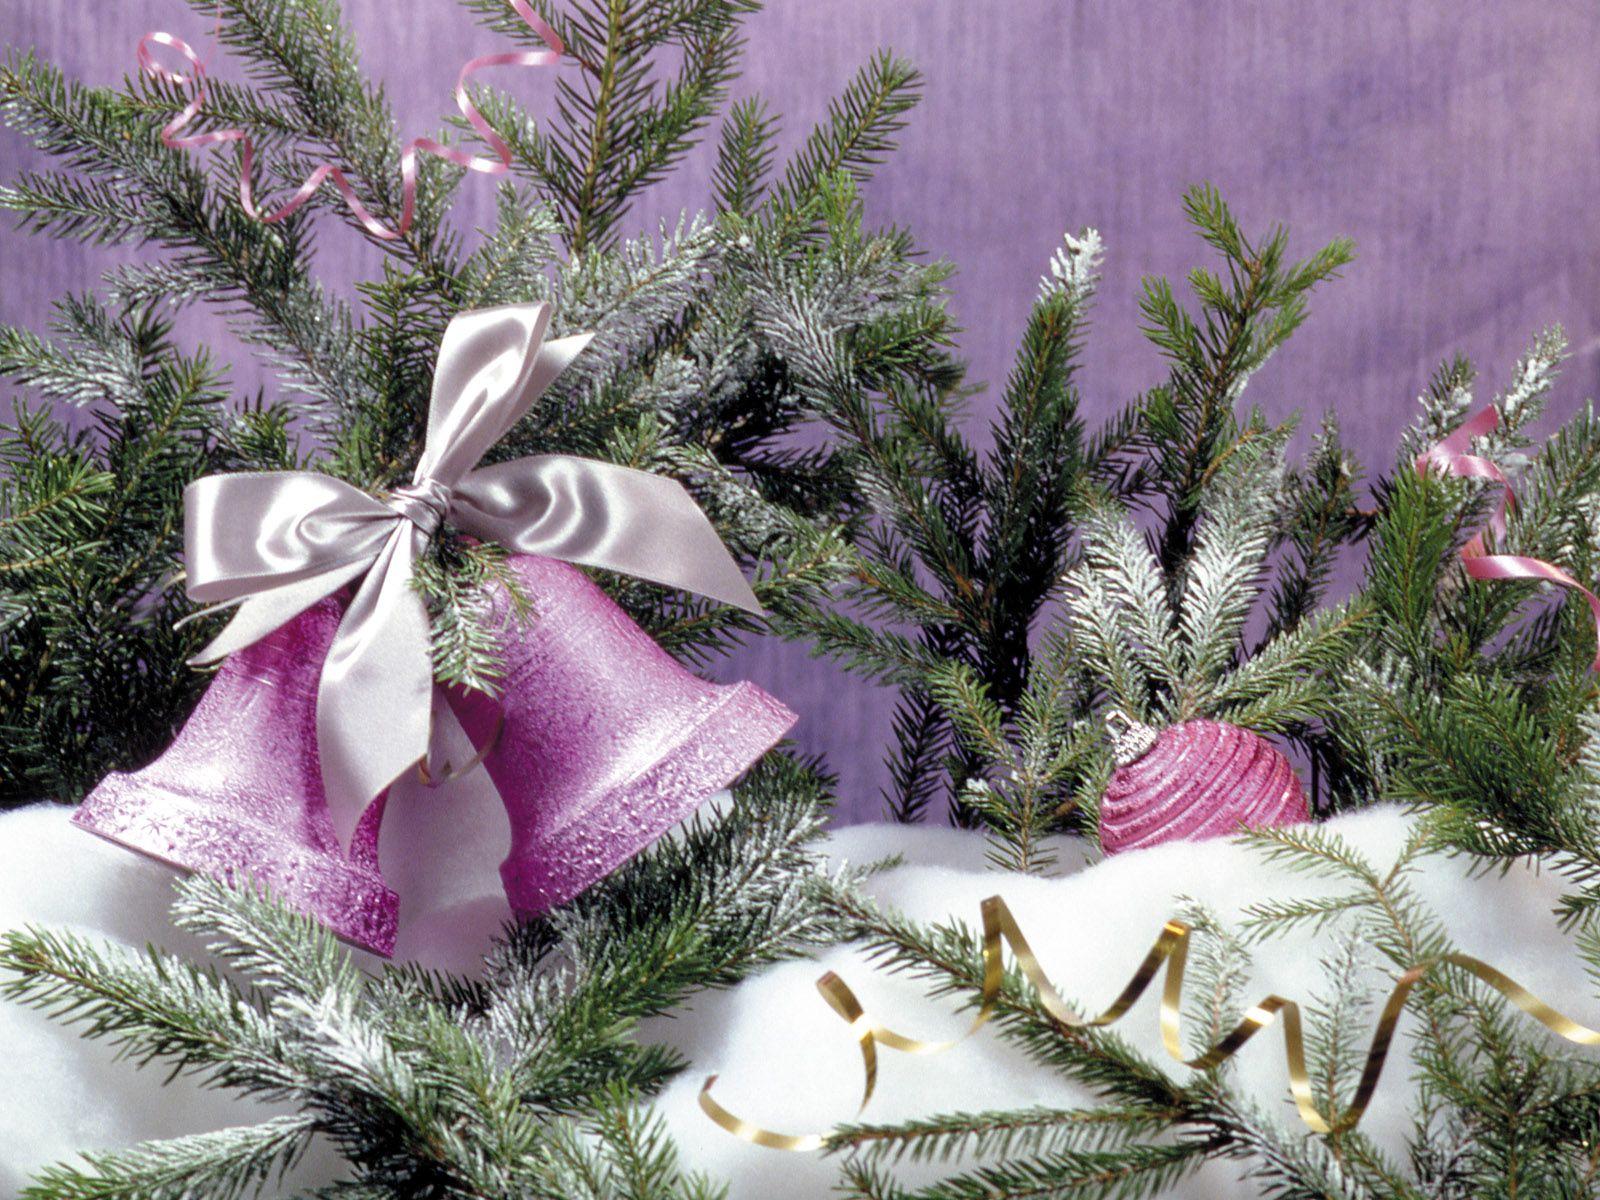 Violet bells / Christmas wallpaper and image